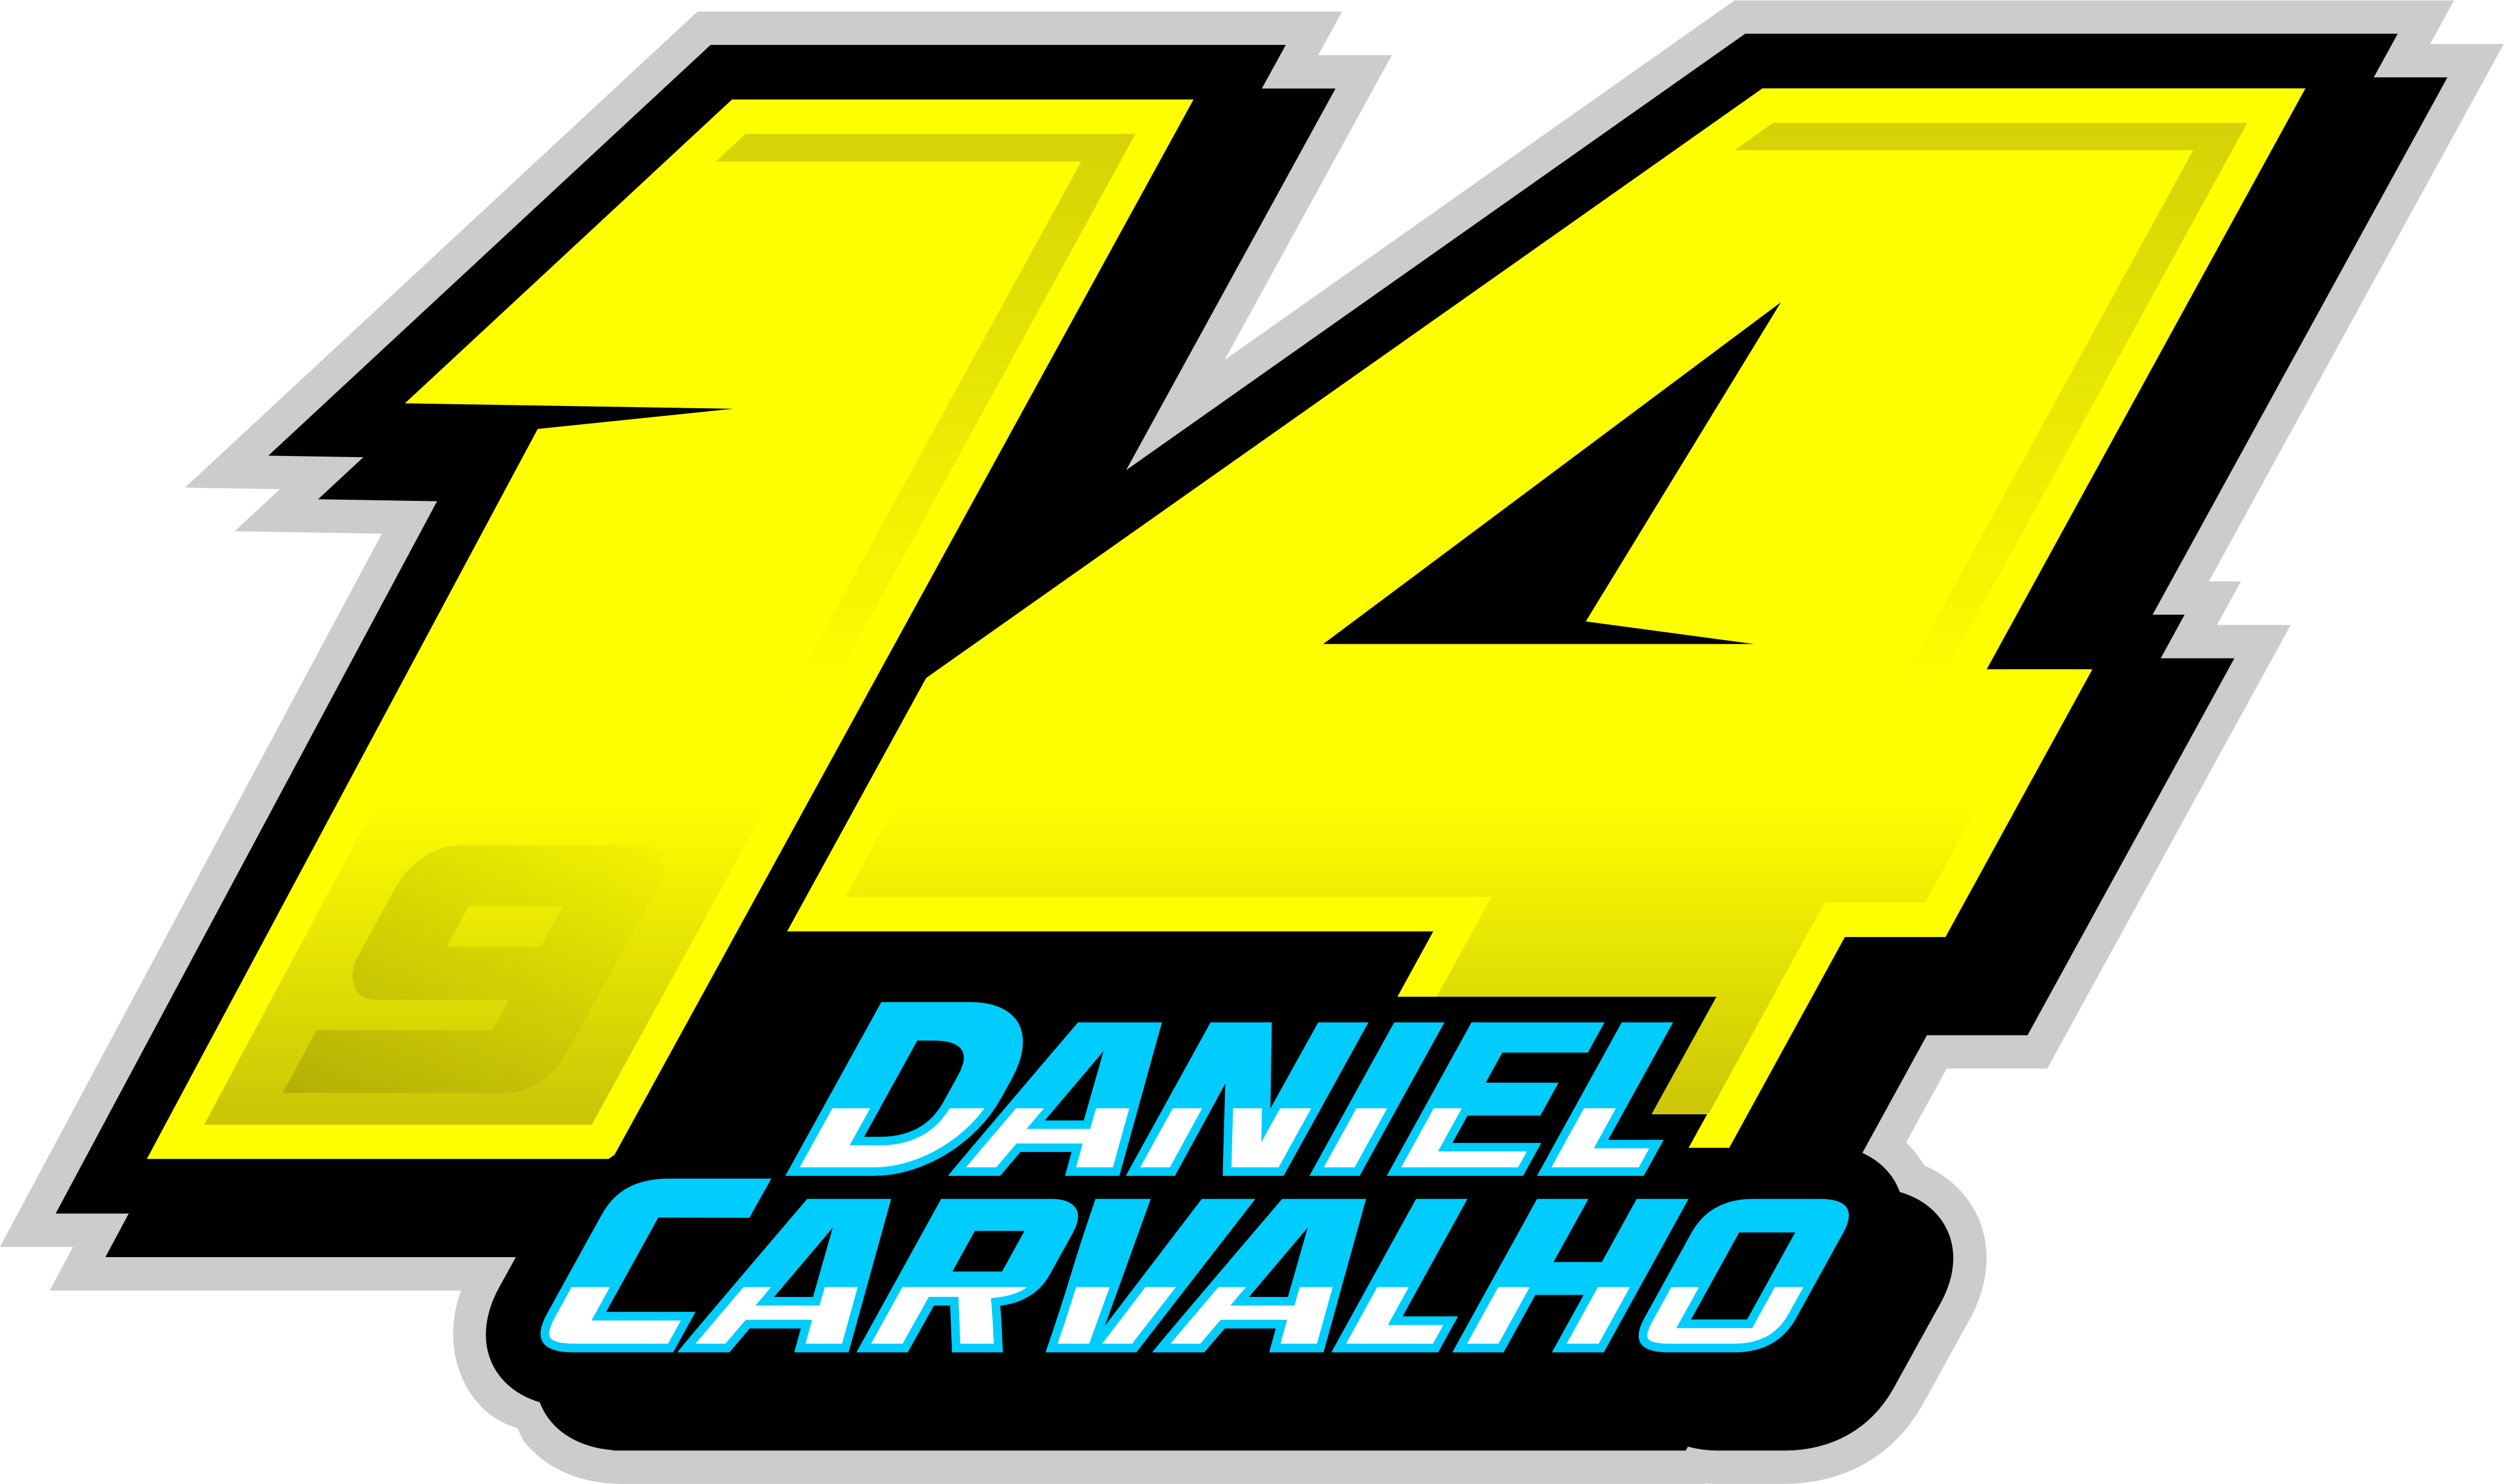 Daniel Carvalho 14.png